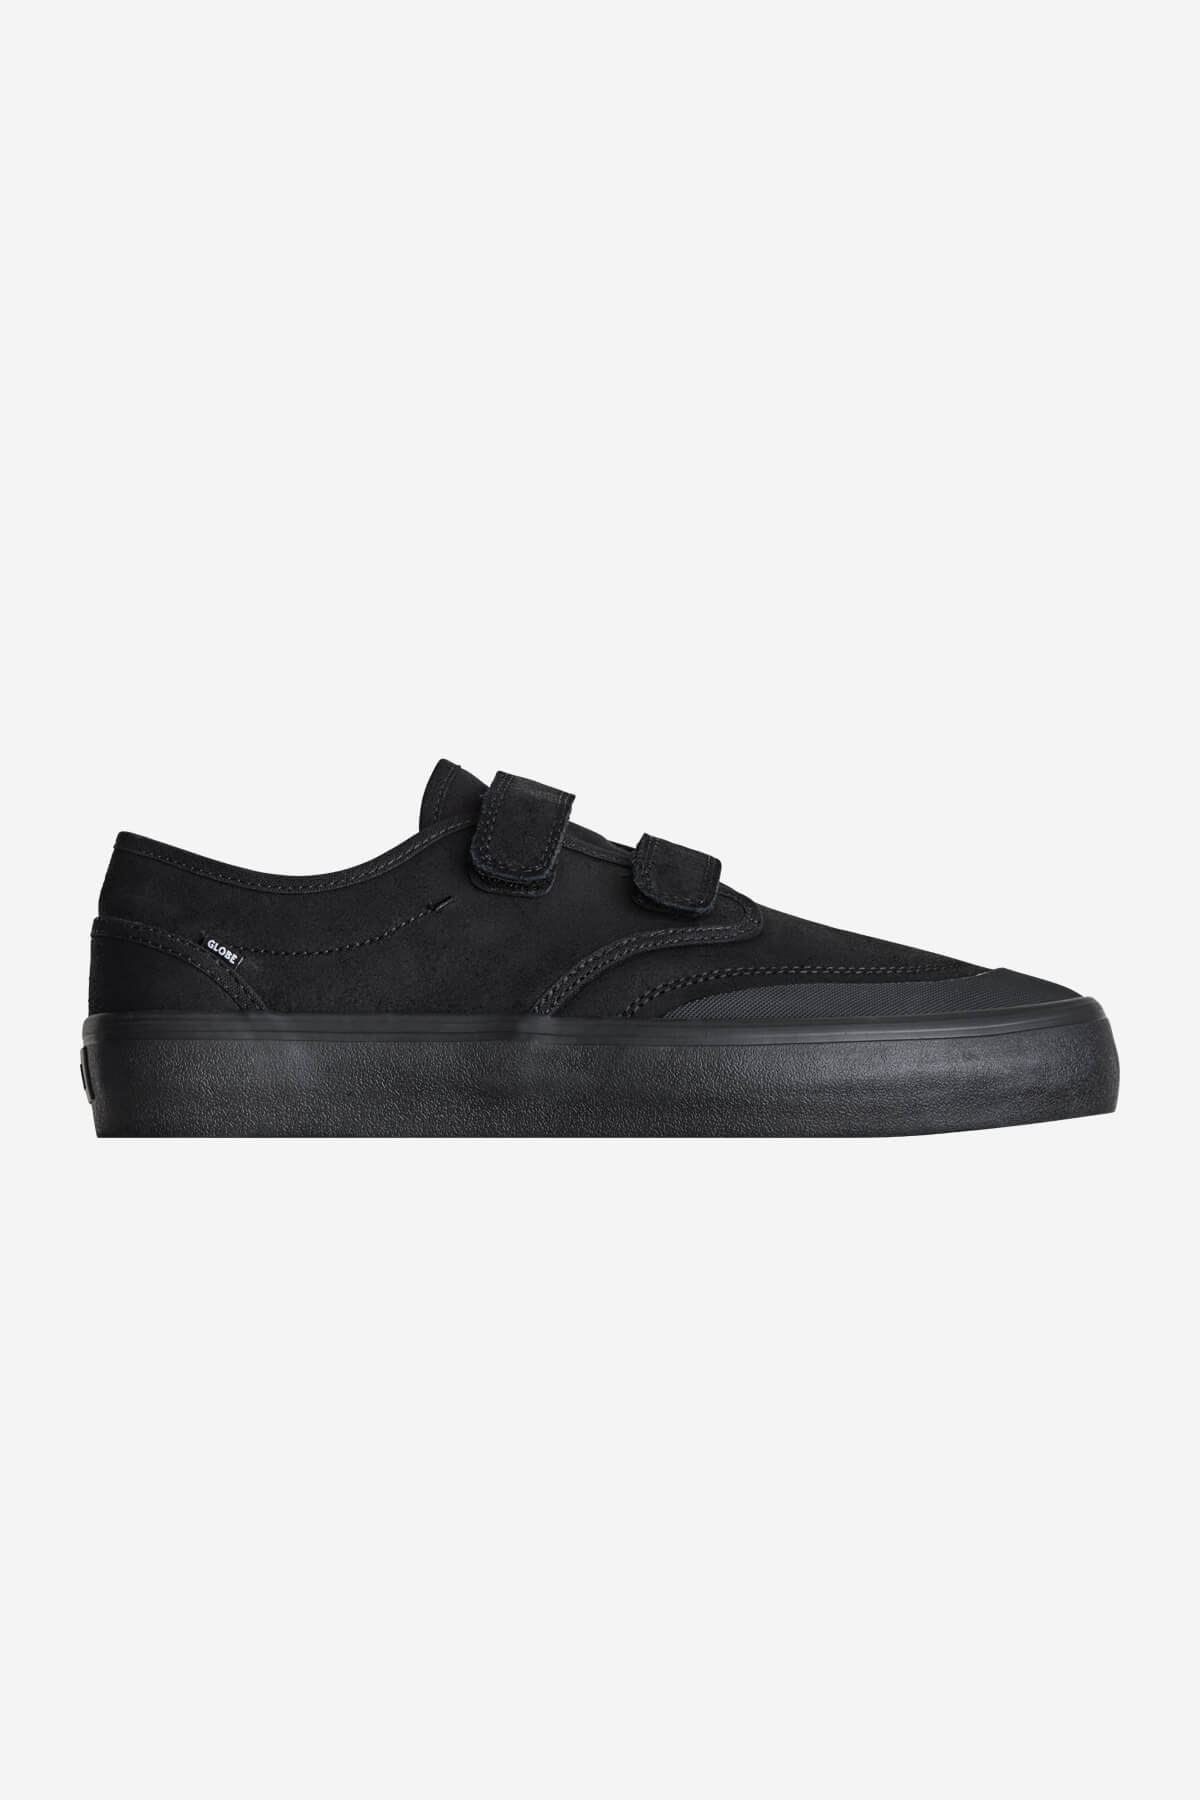 motley ii strap oiled black black skateboard shoes